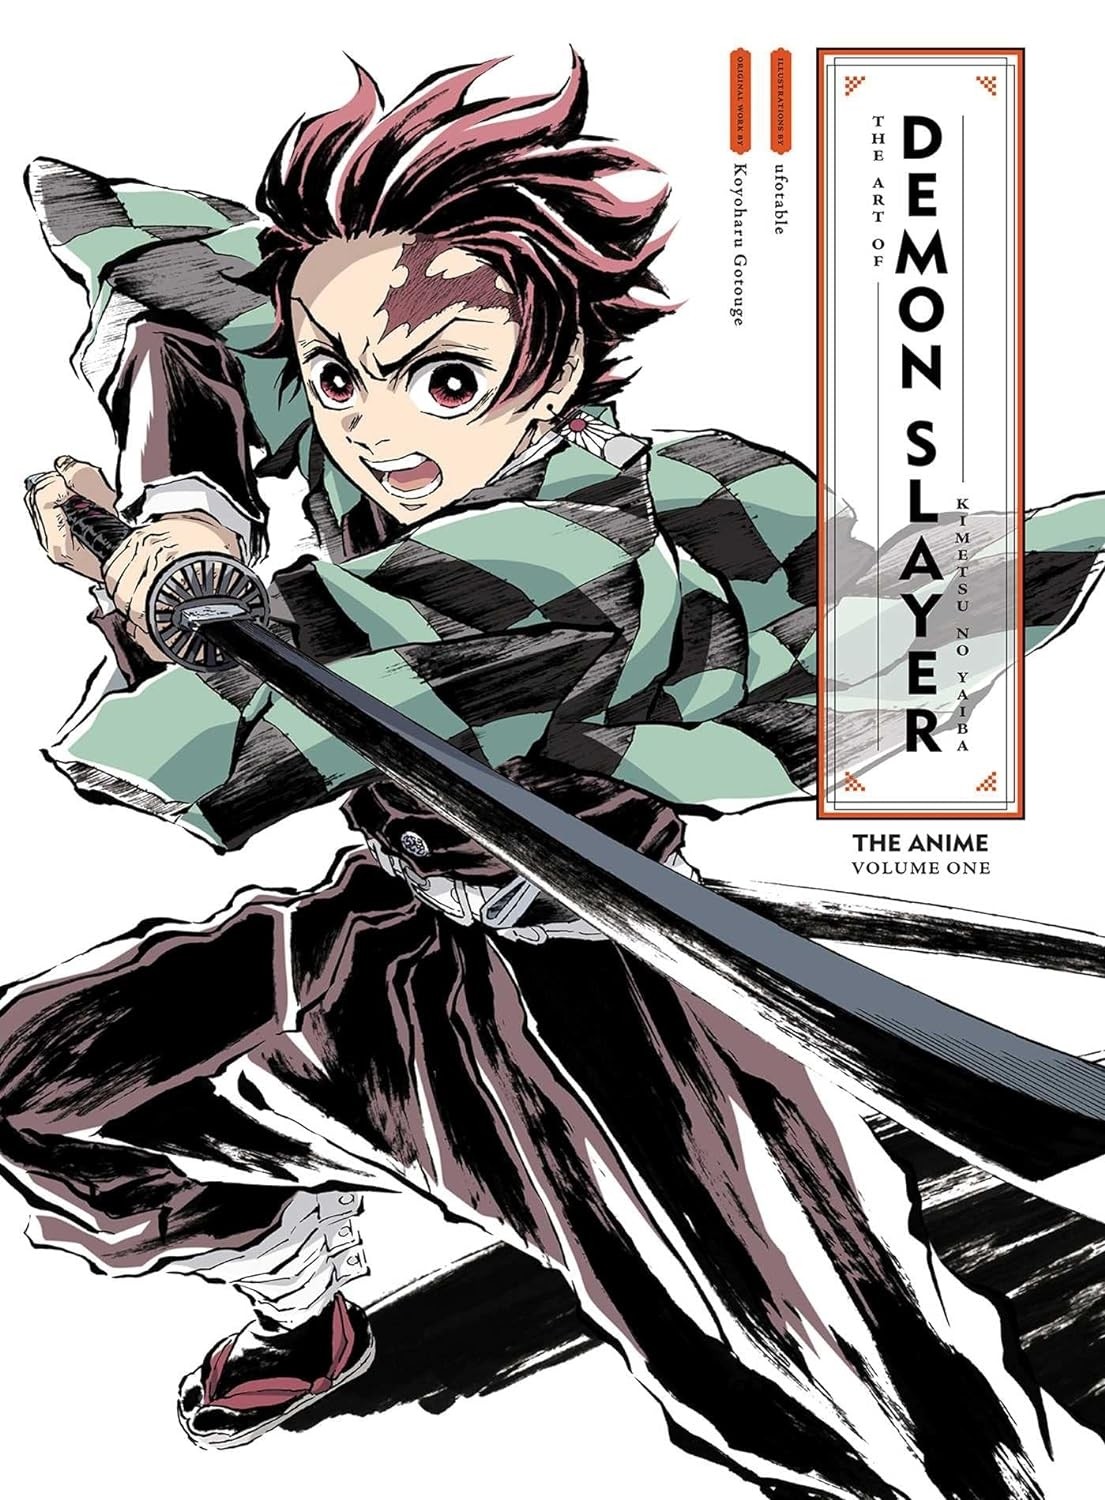 The Art of Demon Slayer: Kimetsu no Yaiba the Anime Volume One